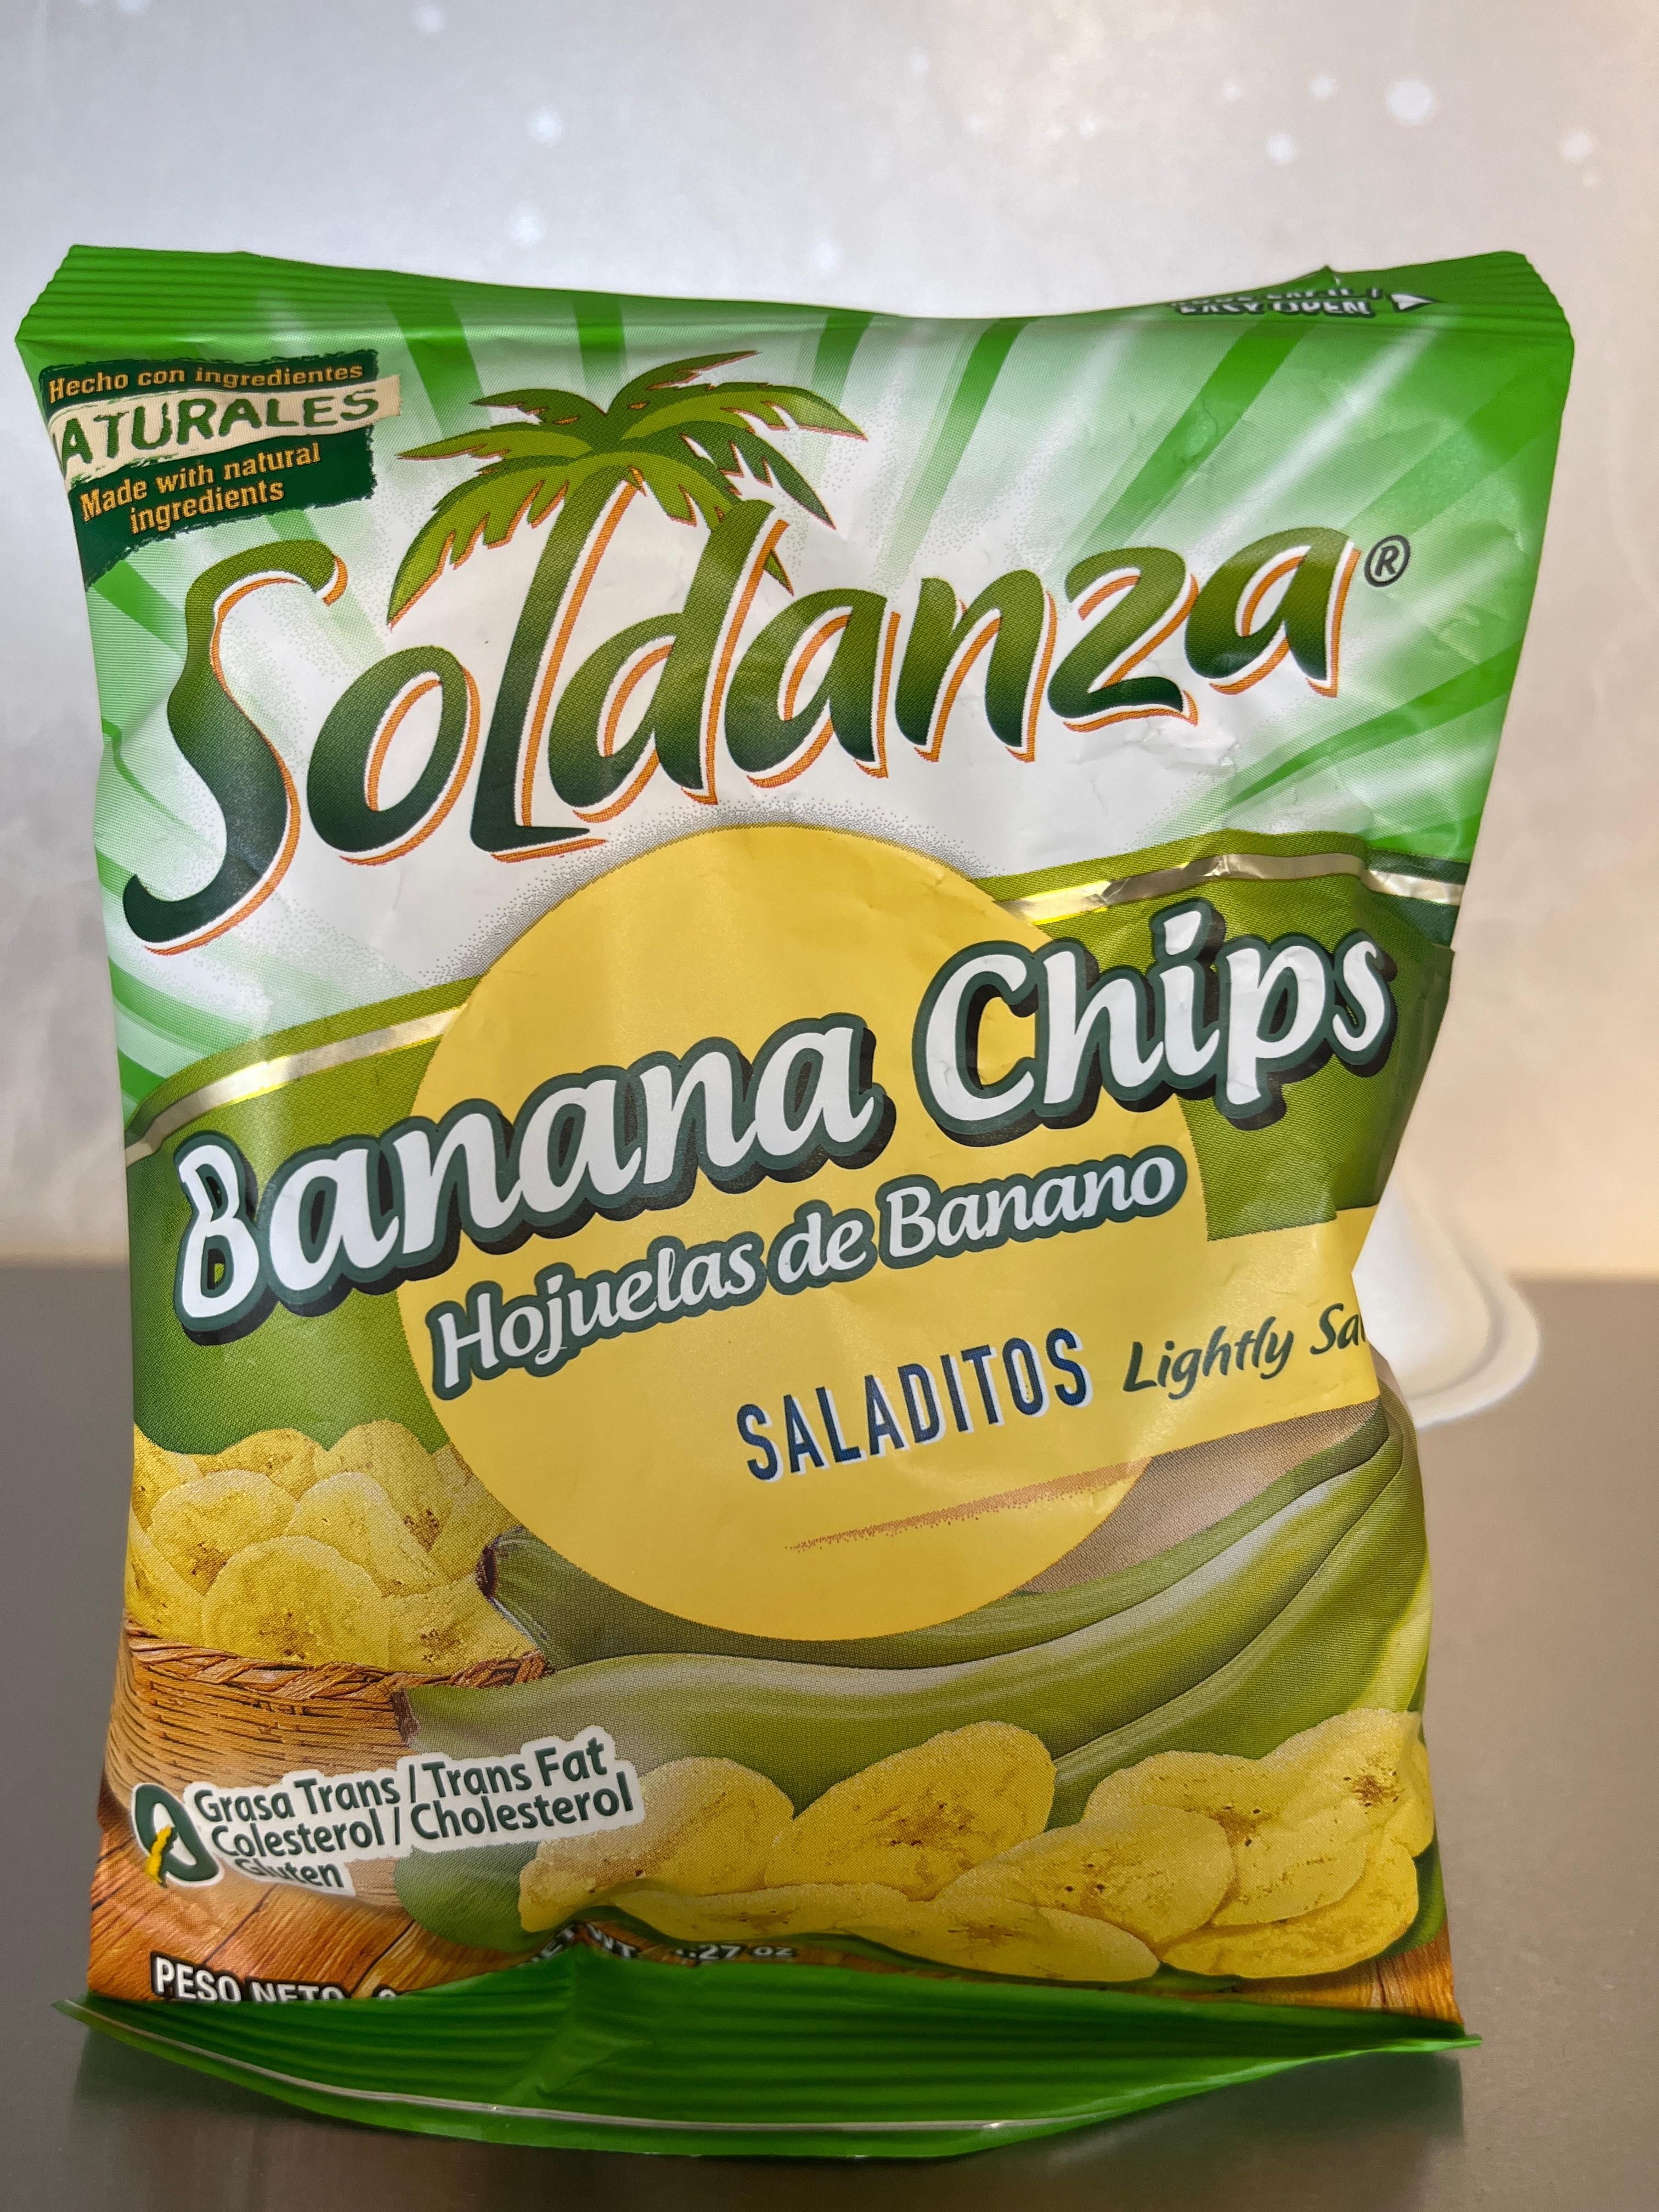 Soldanza Banana chips